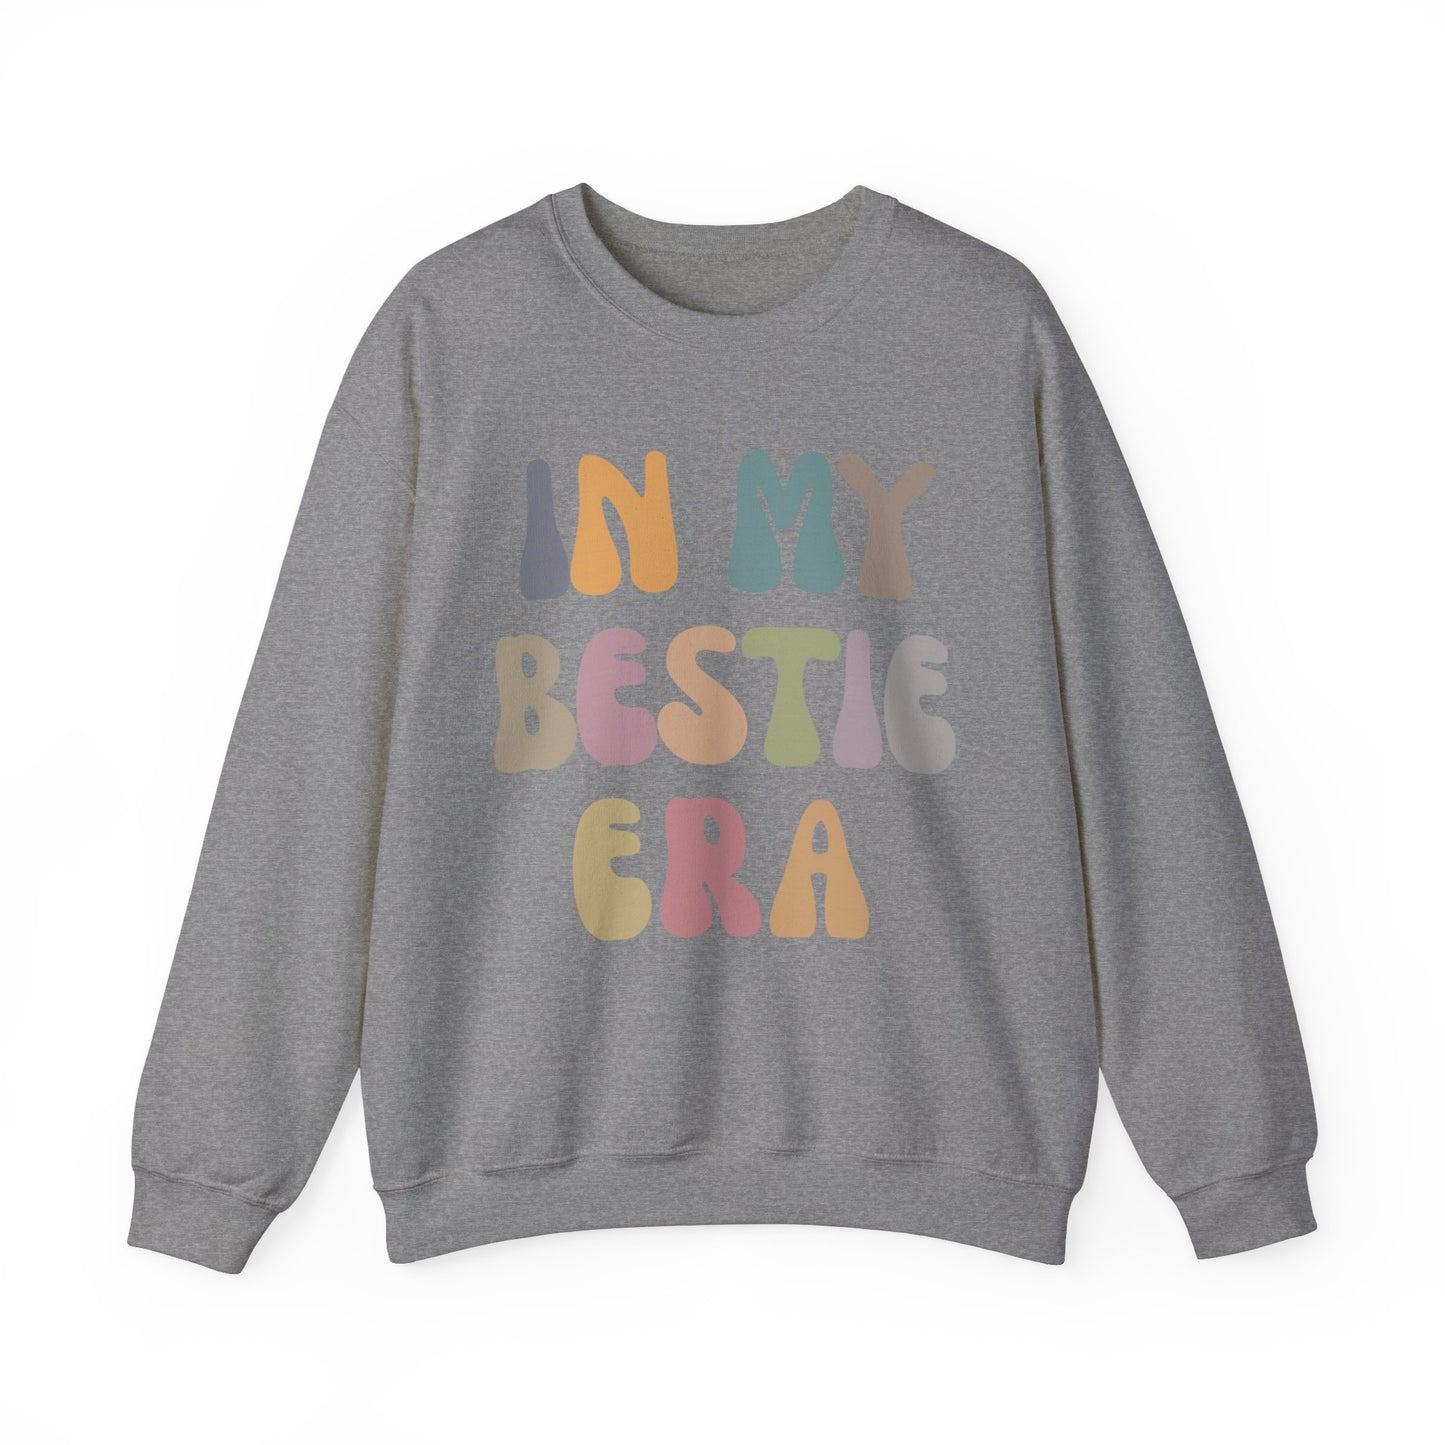 In My Bestie Era Sweatshirt, BFF Shirt for Women, Friendship Gift, Best Friends Forever Sweatshirt, Matching Bestie Sweatshirt, S1426